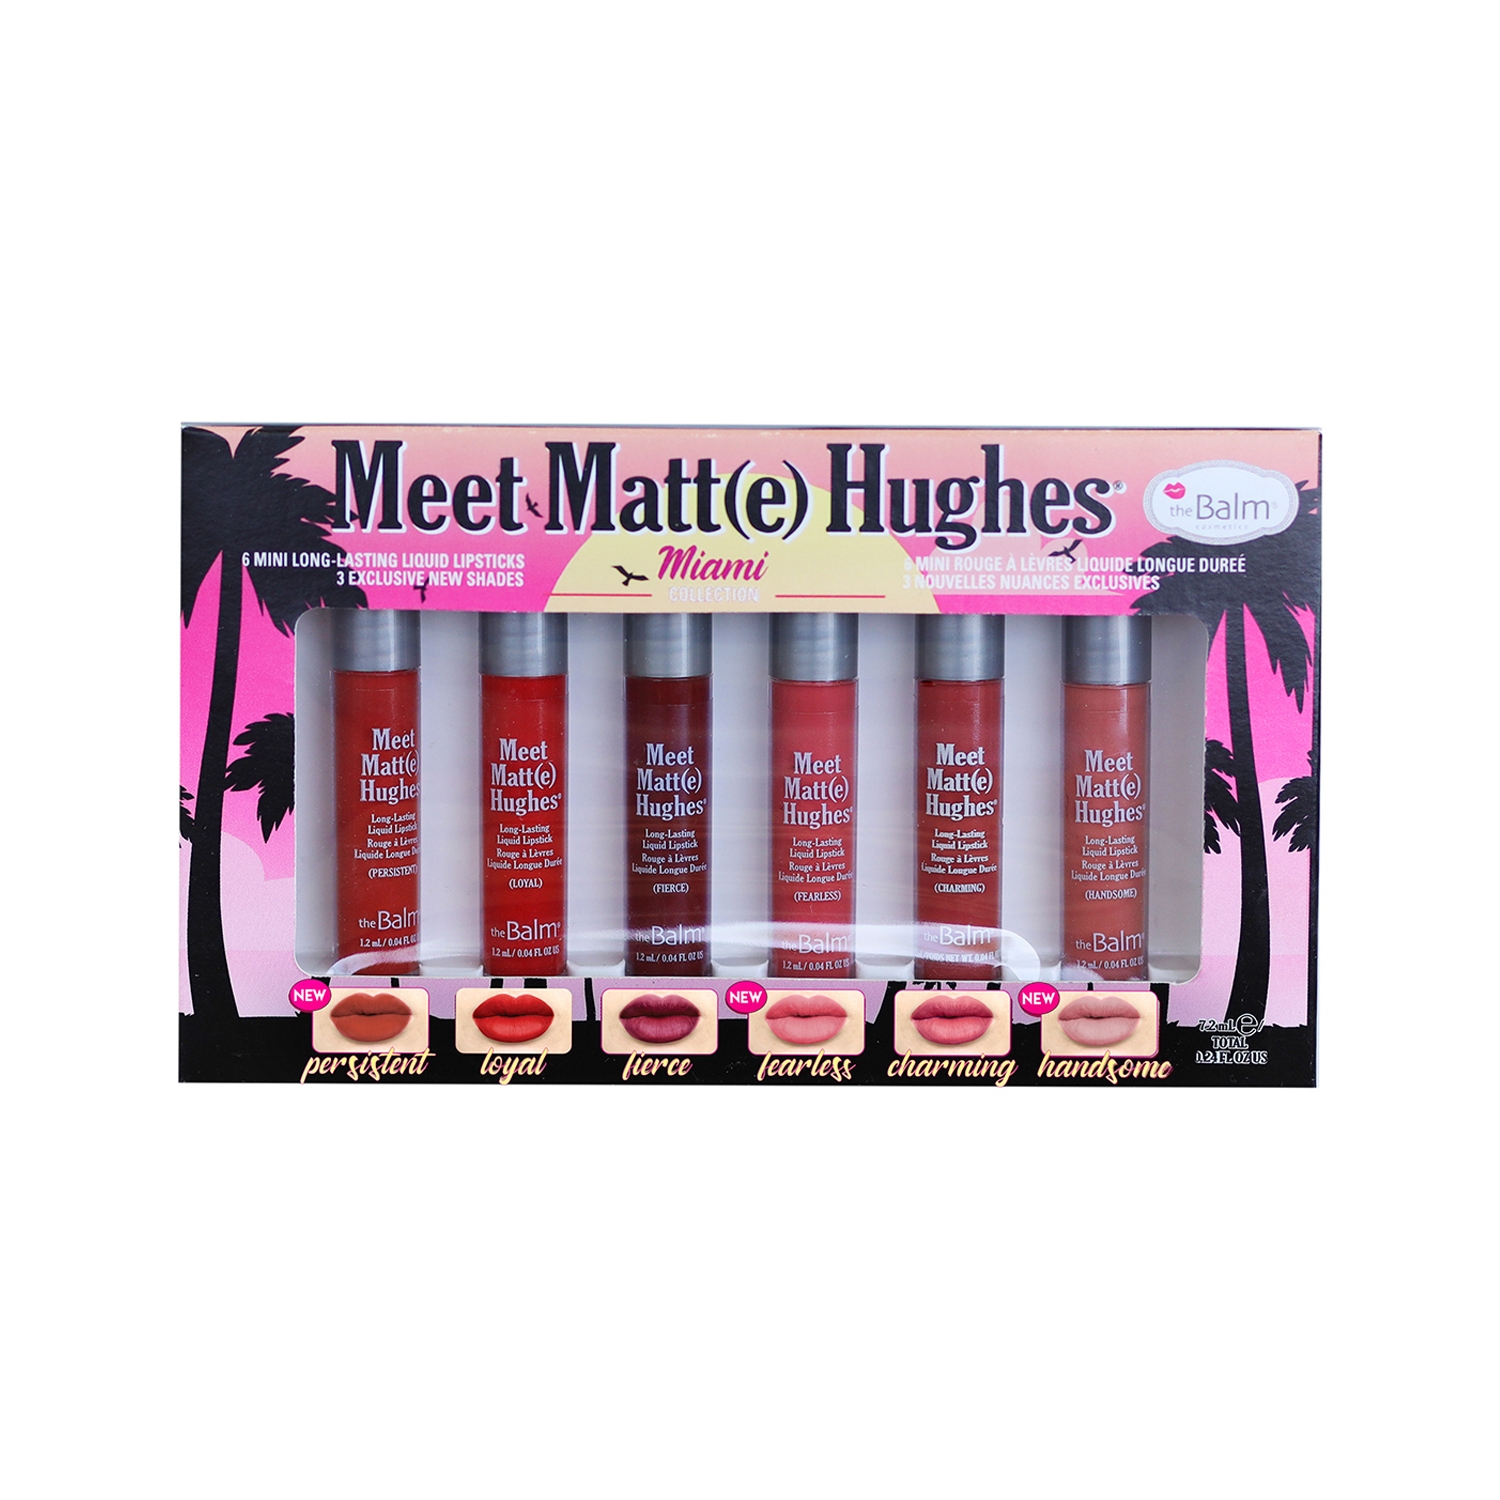 theBalm Cosmetics | theBalm Cosmetics Meet Matte Hughes Liquid Lipsticks Mini Kit - Miami (6Pcs)